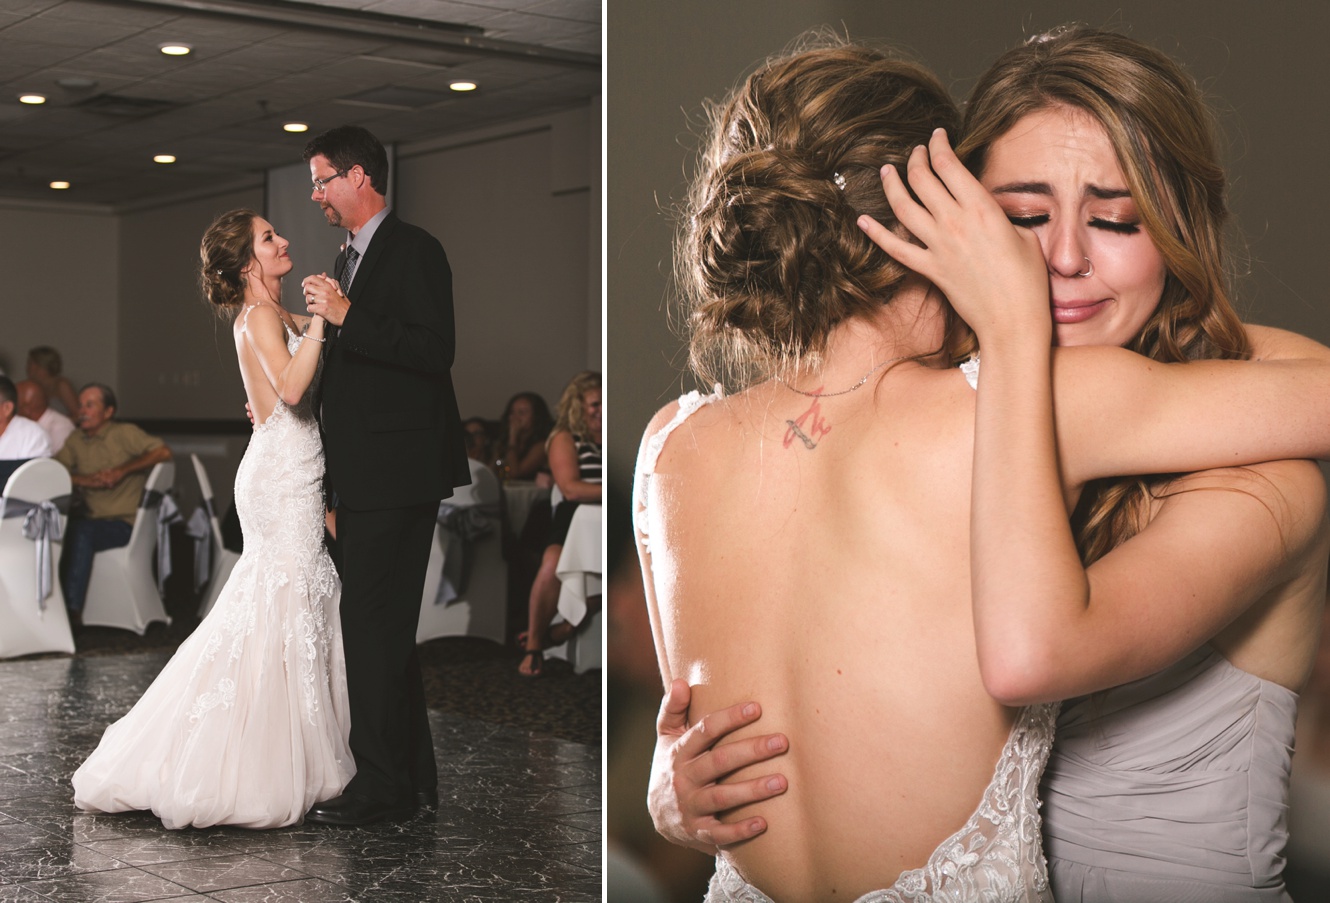 Emotional wedding day photos